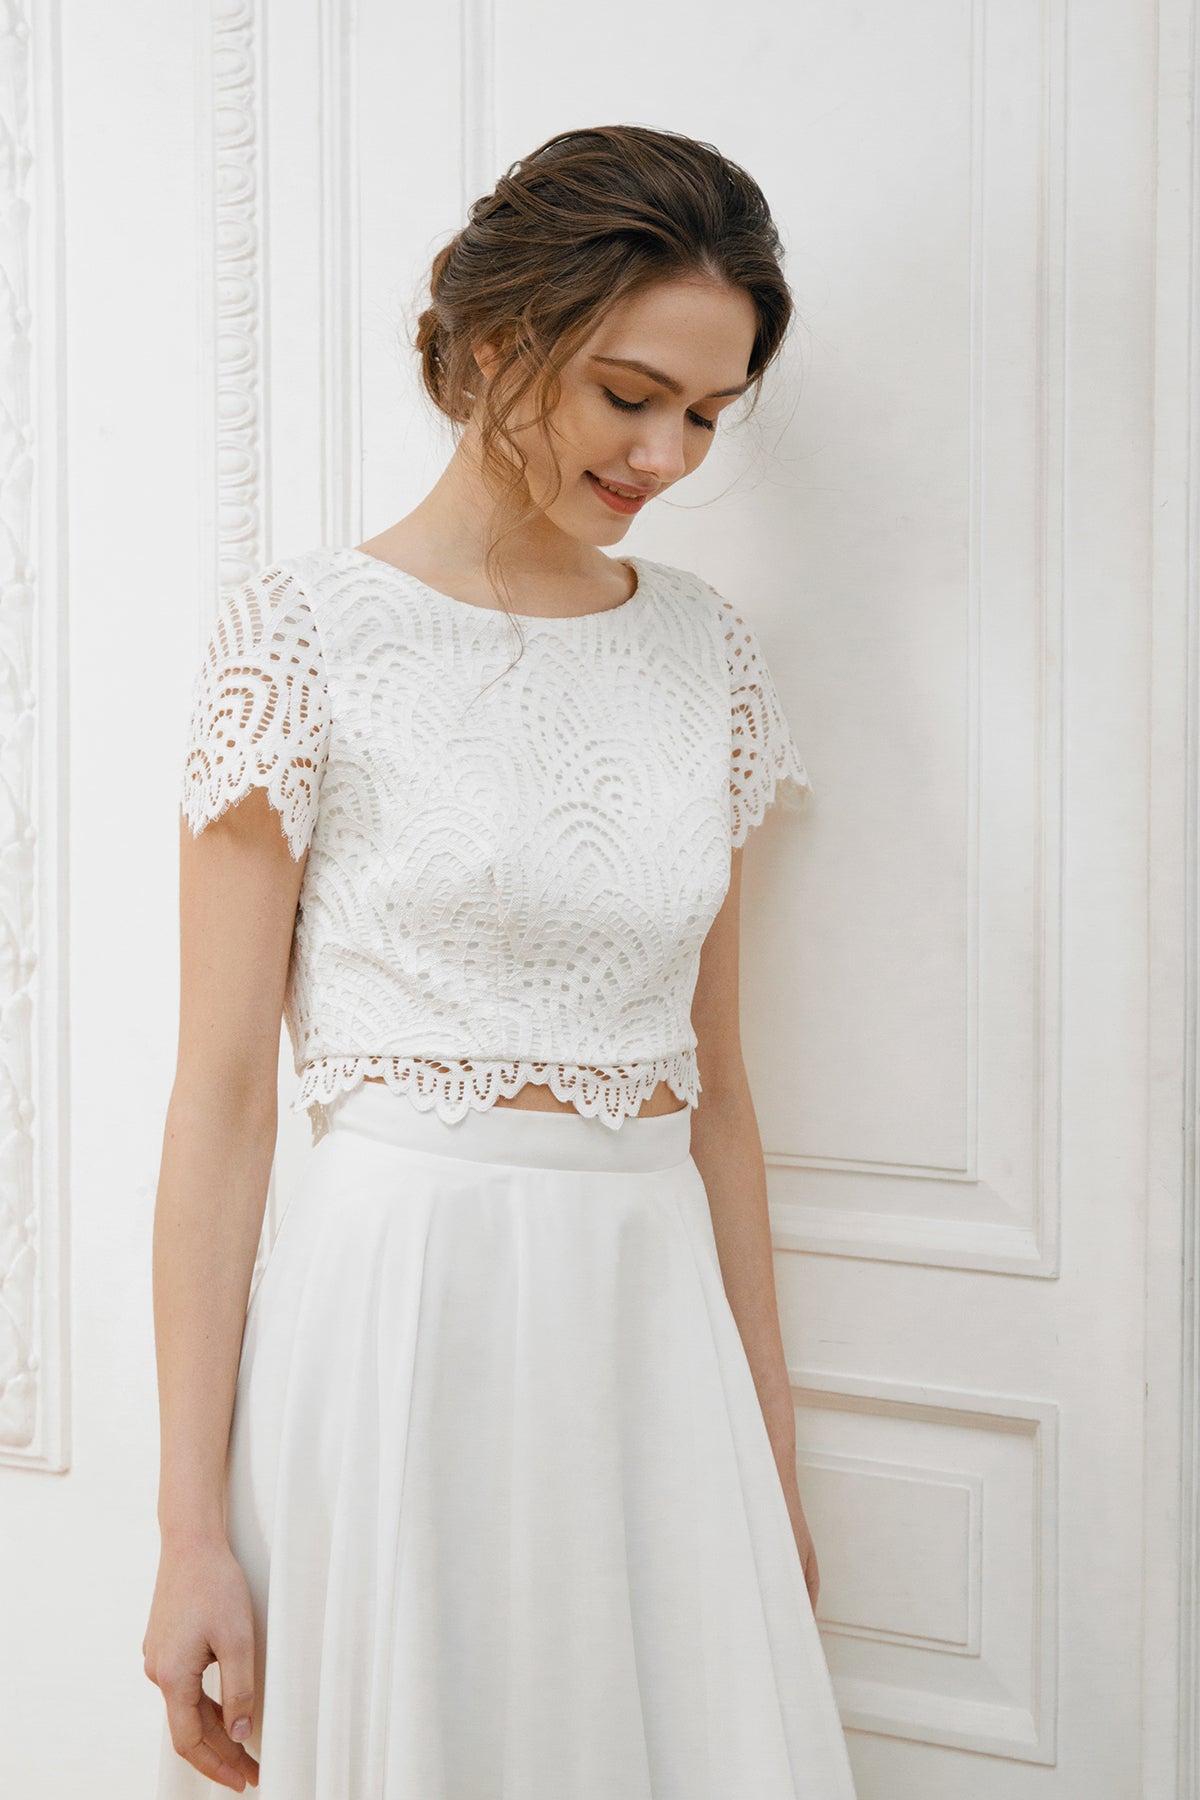 Crop top wedding dress • high low chiffon skirt • minimalistic wedding dress